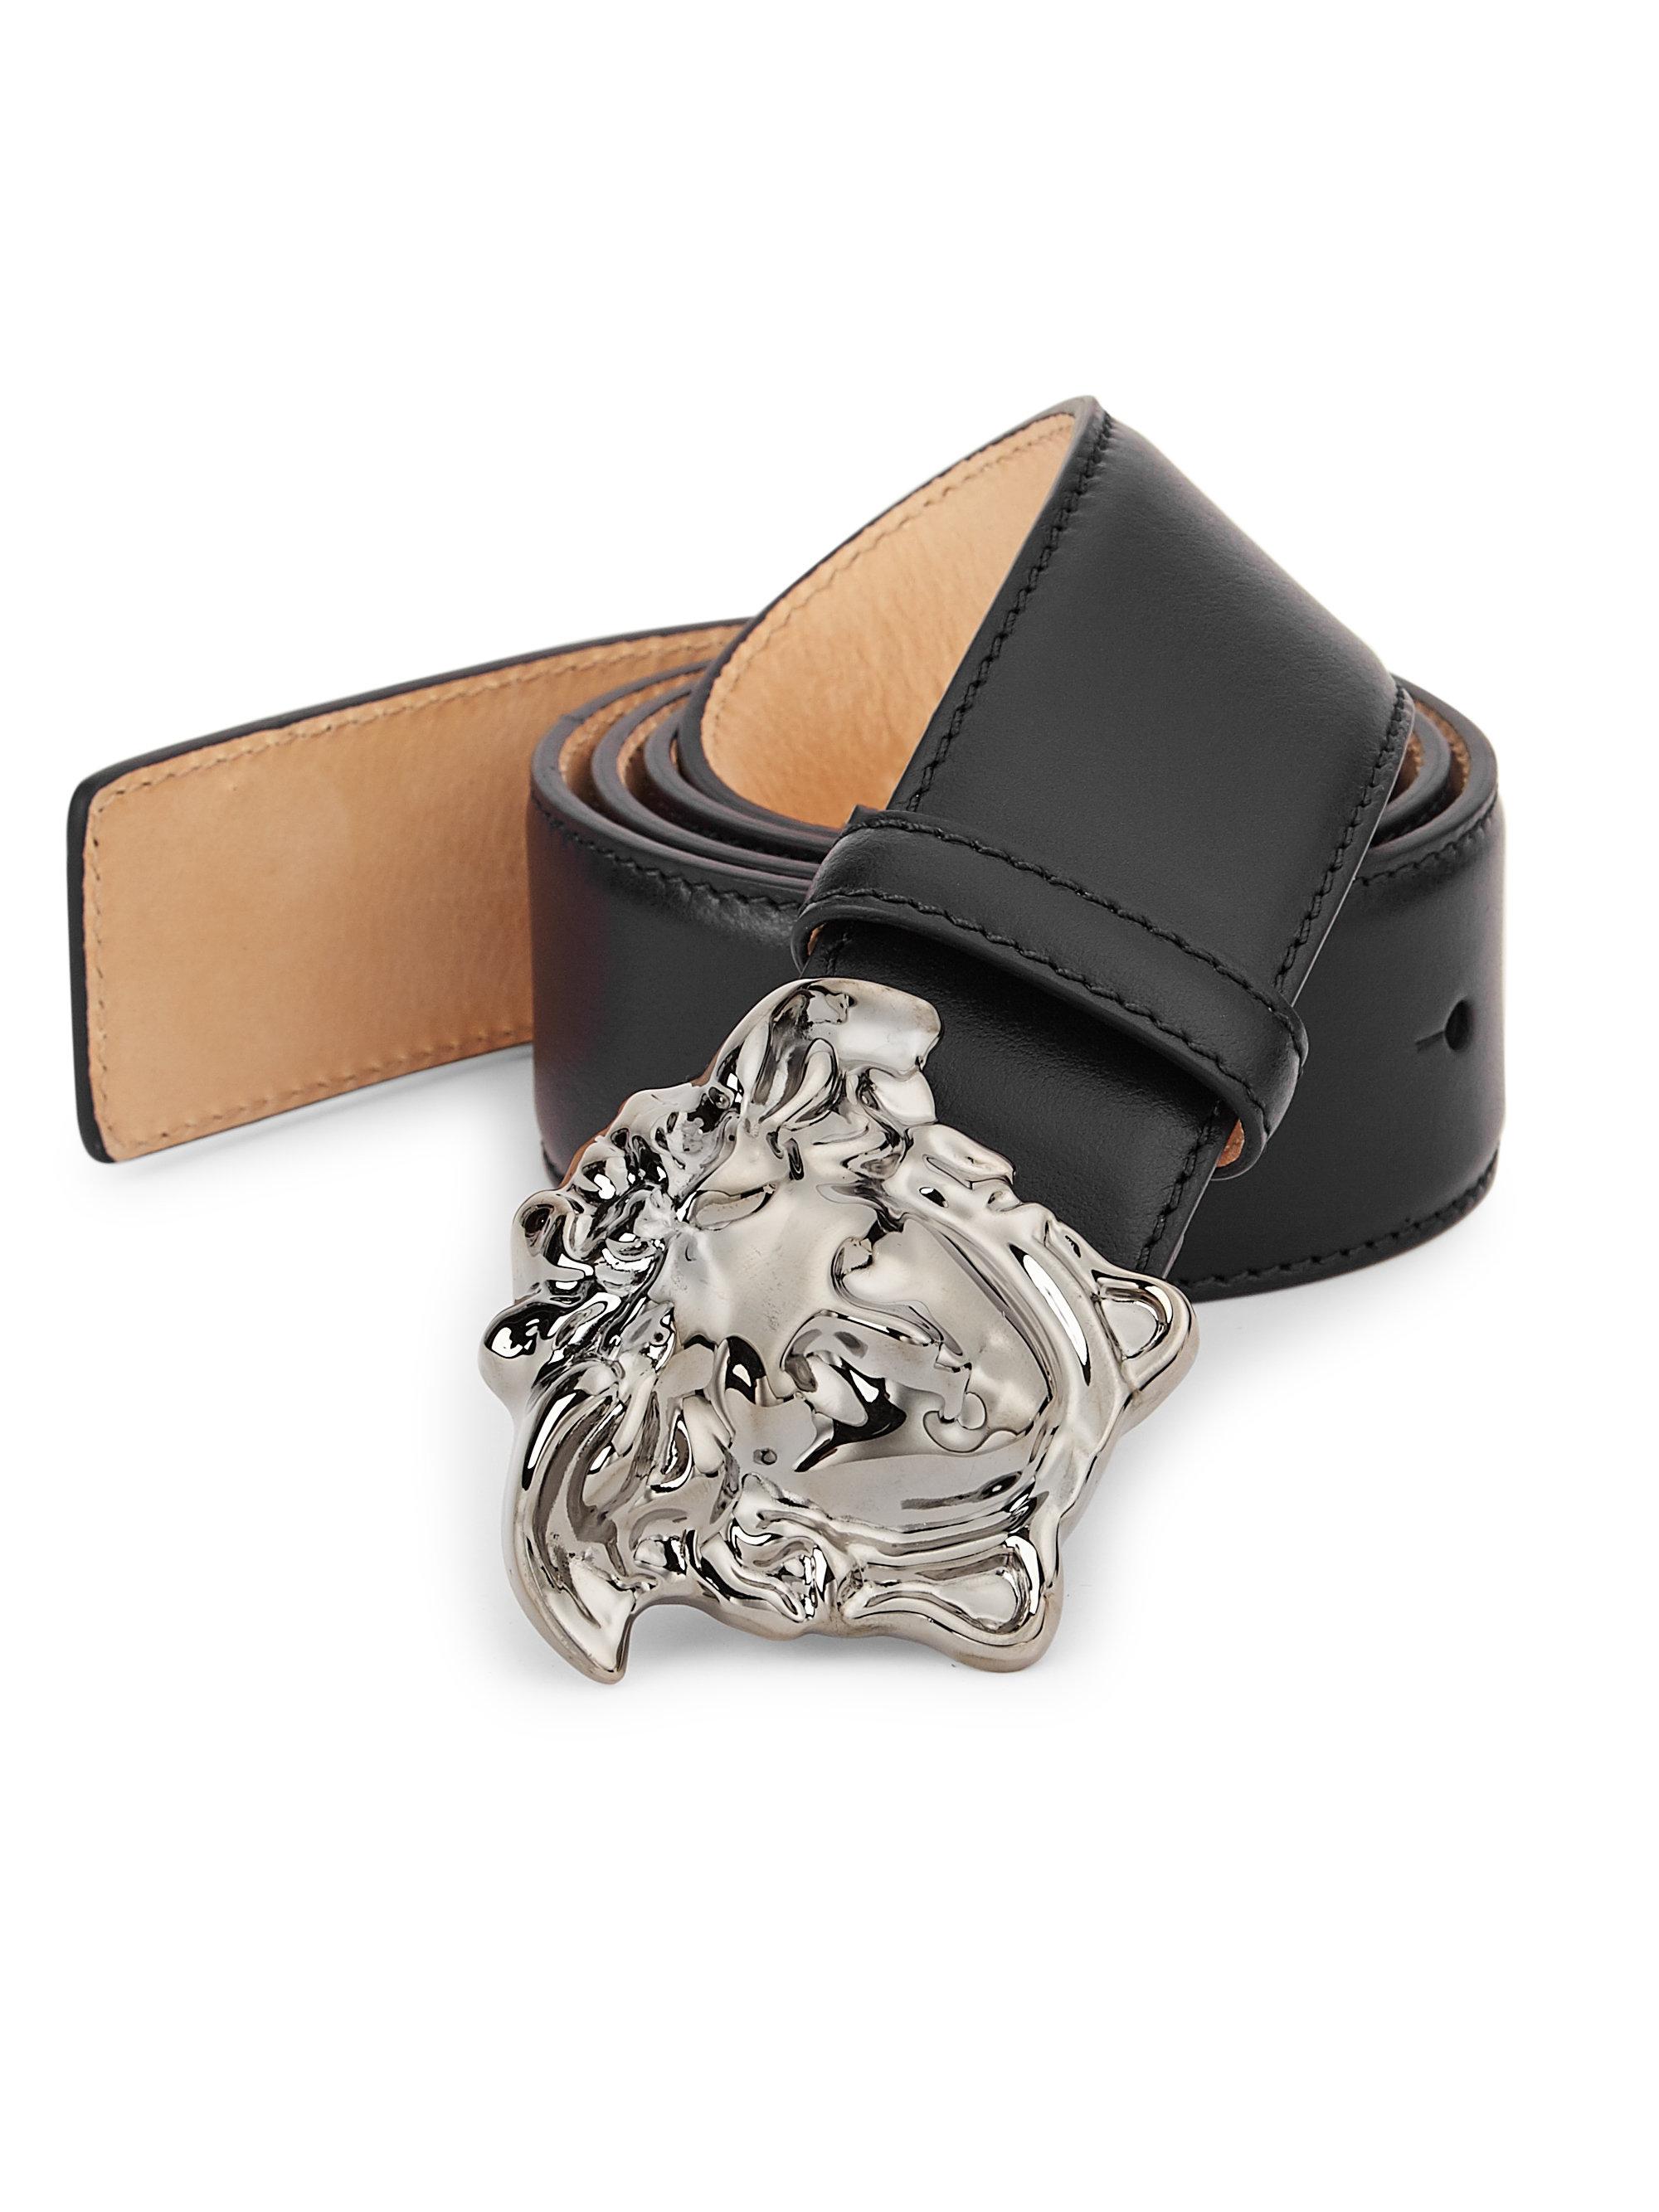 Versace Medusa-buckle Leather Belt in Black for Men - Lyst